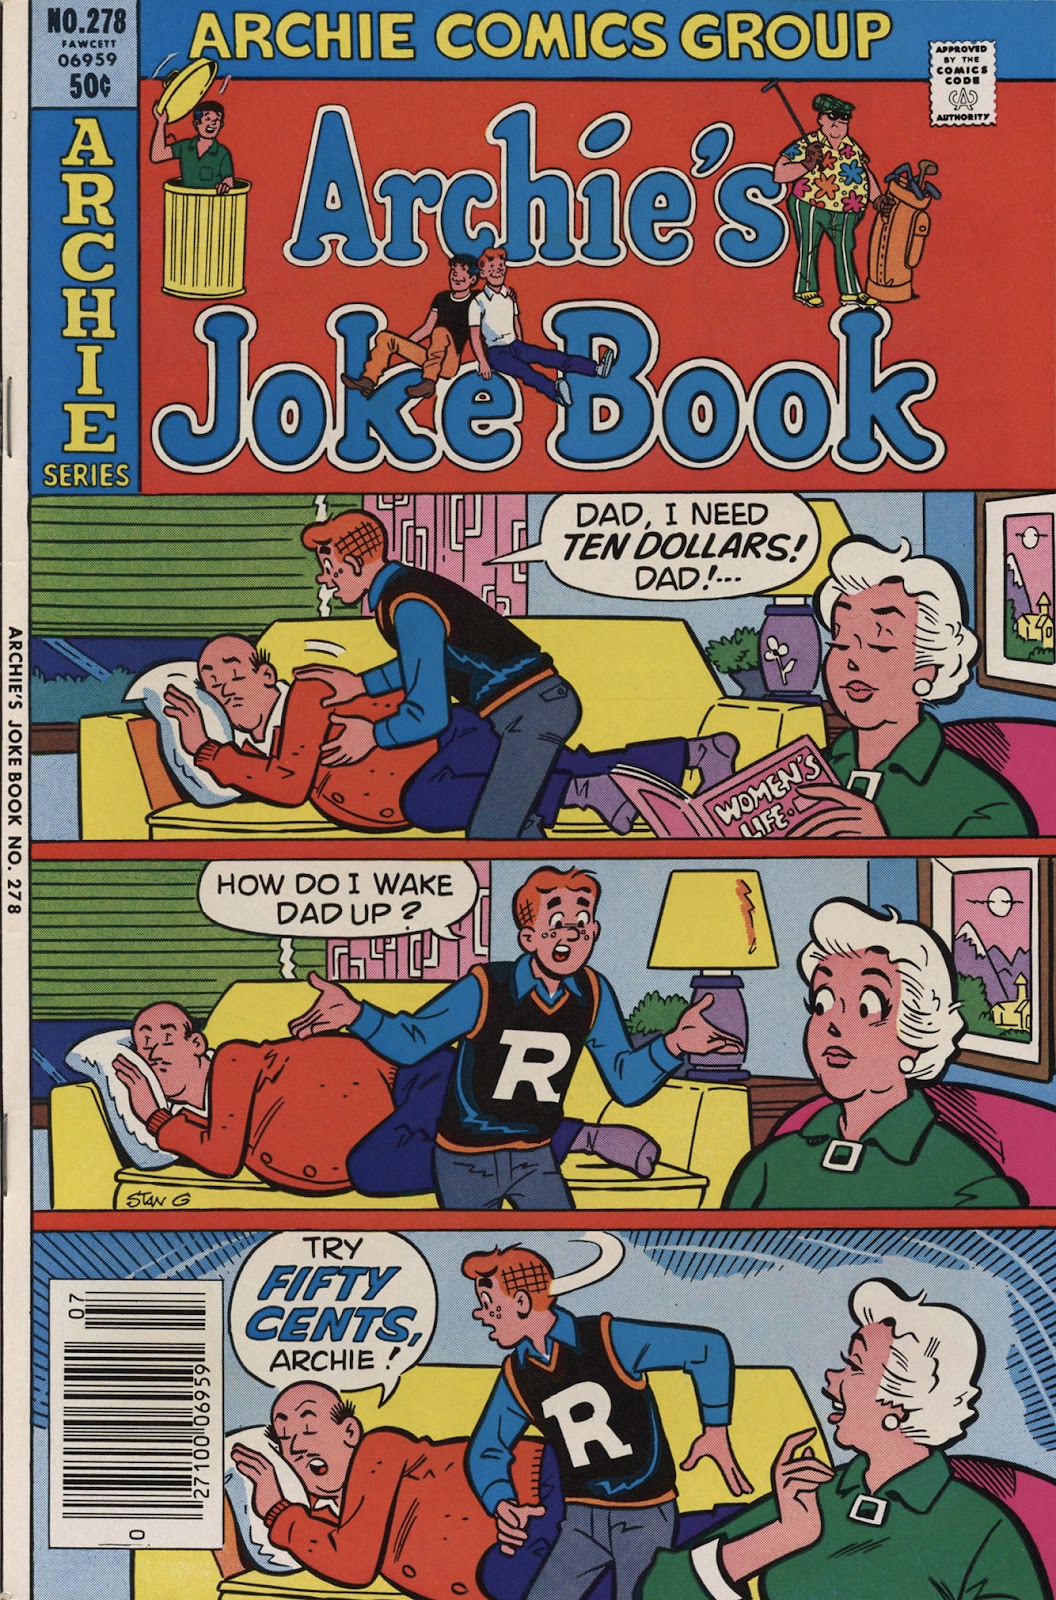 Archie's Joke Book Magazine 278 Page 1